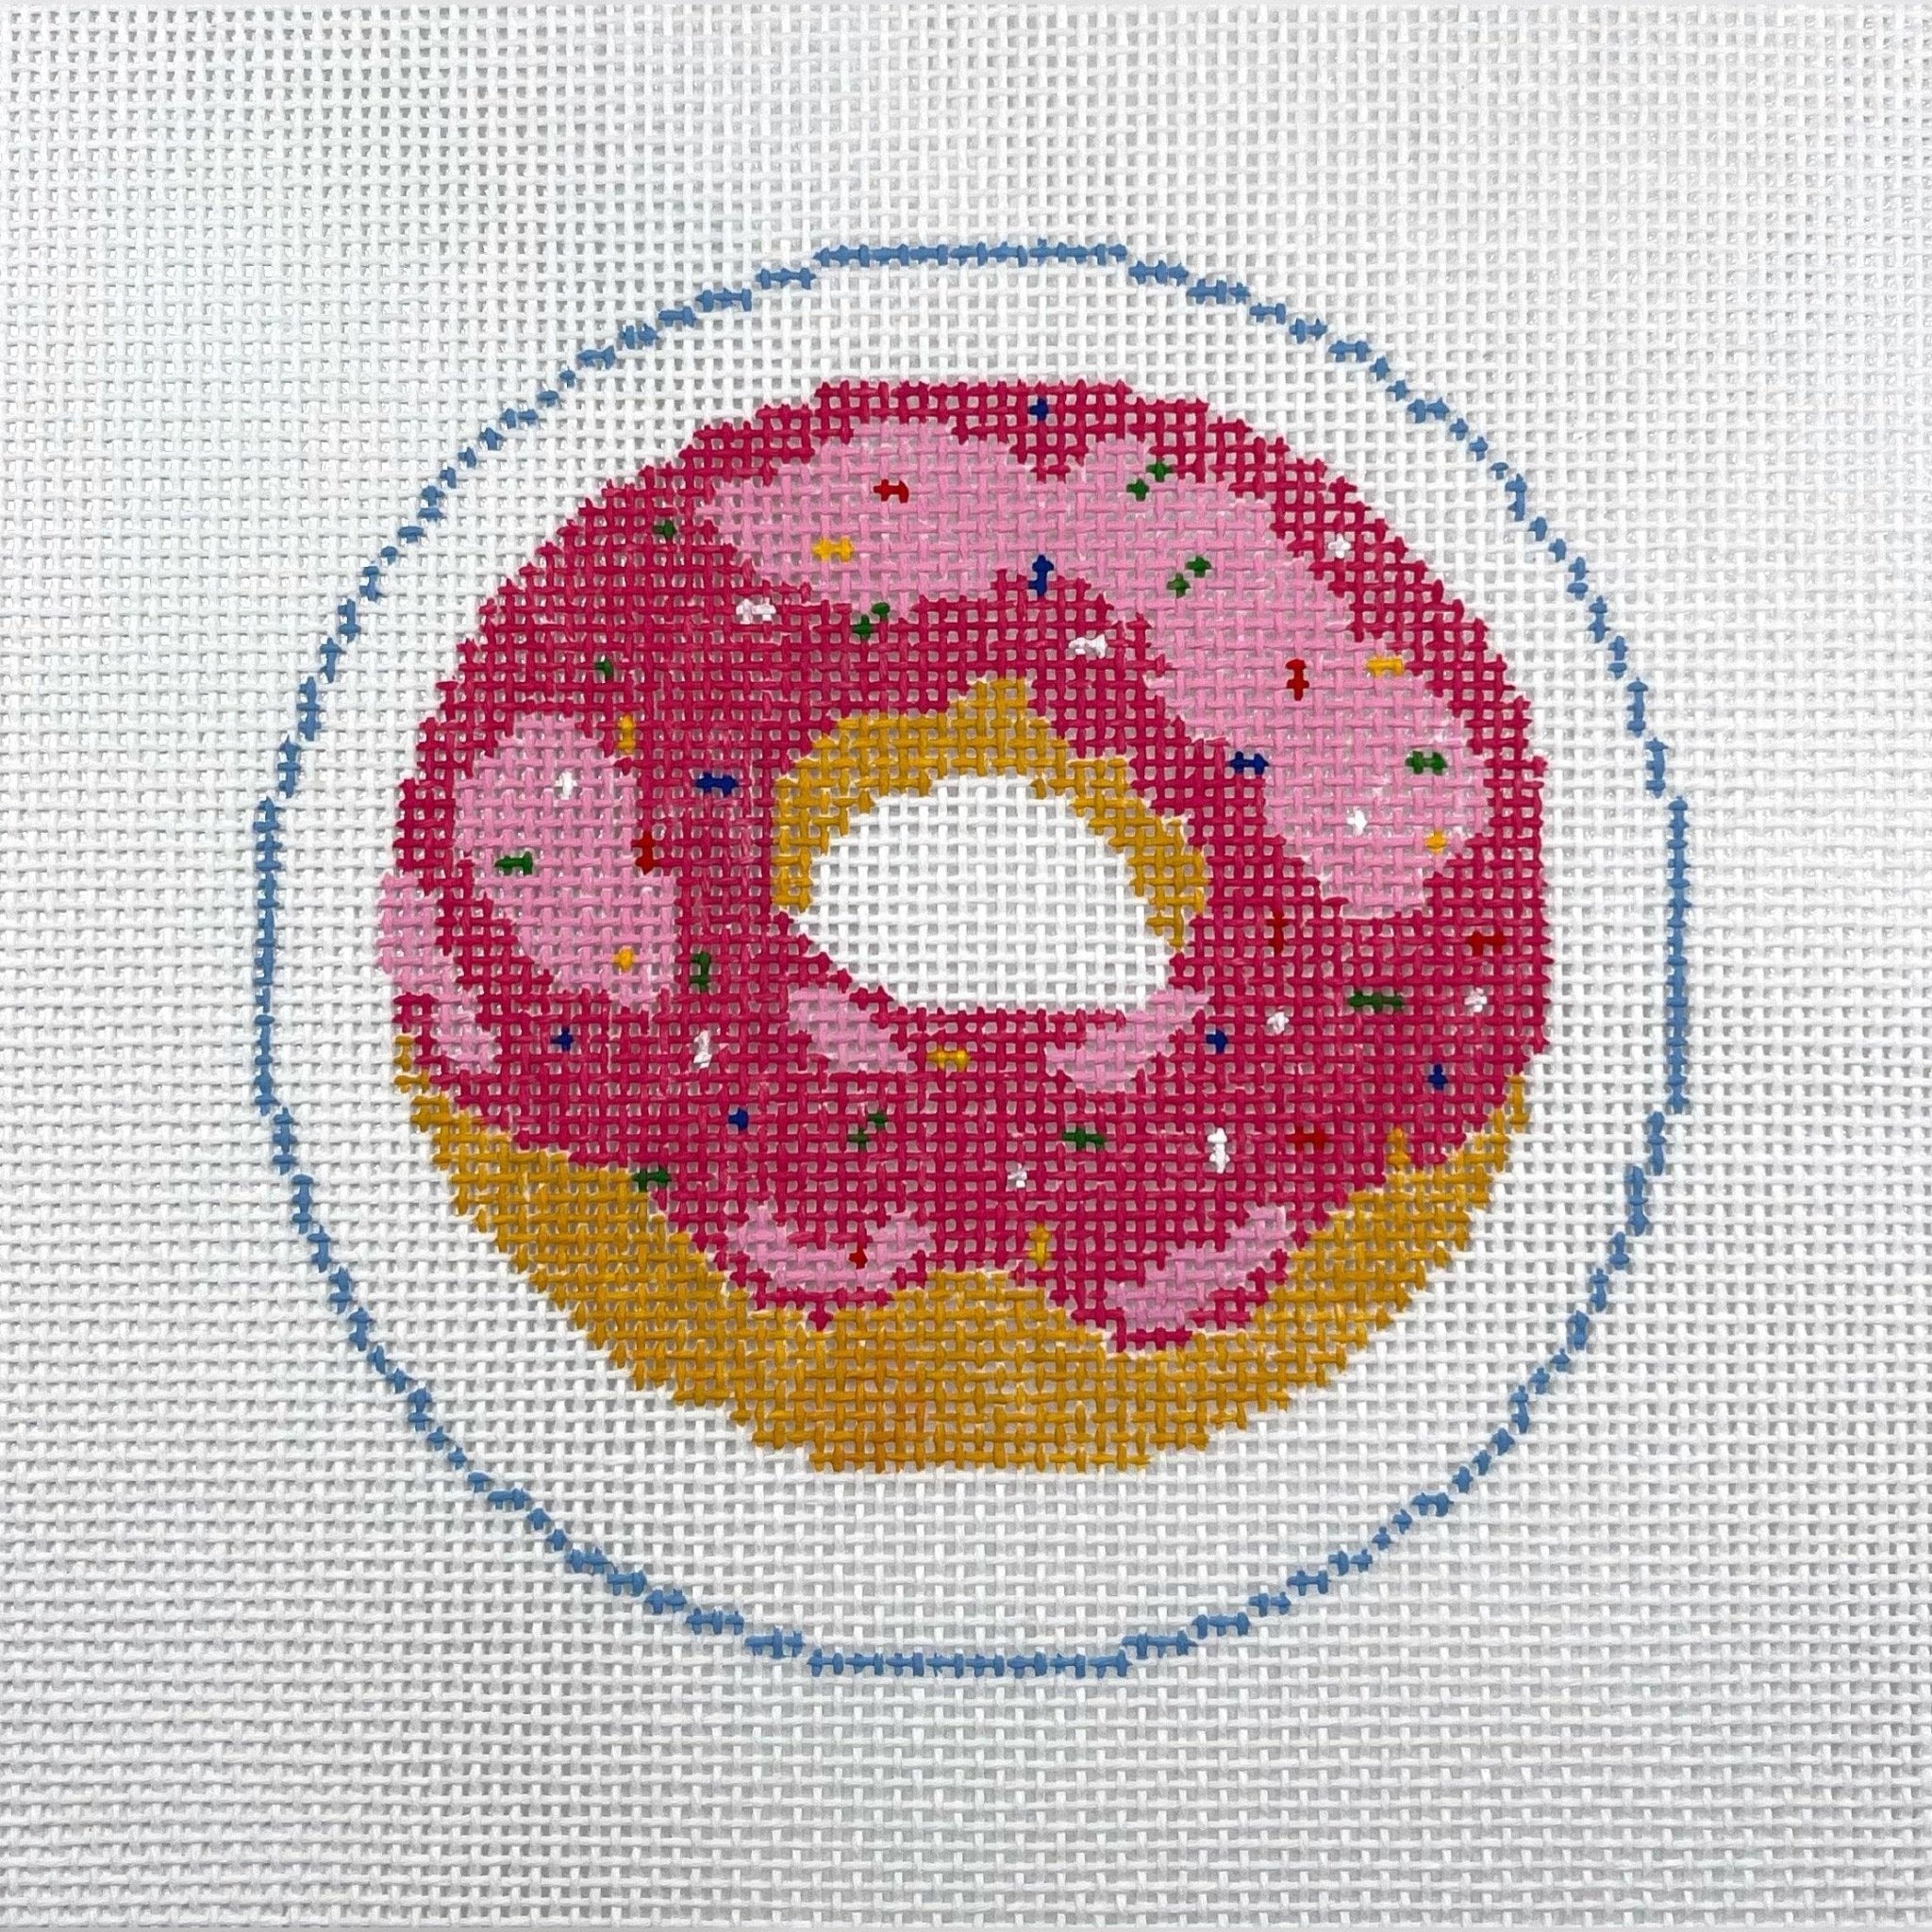 Donut ornament canvas